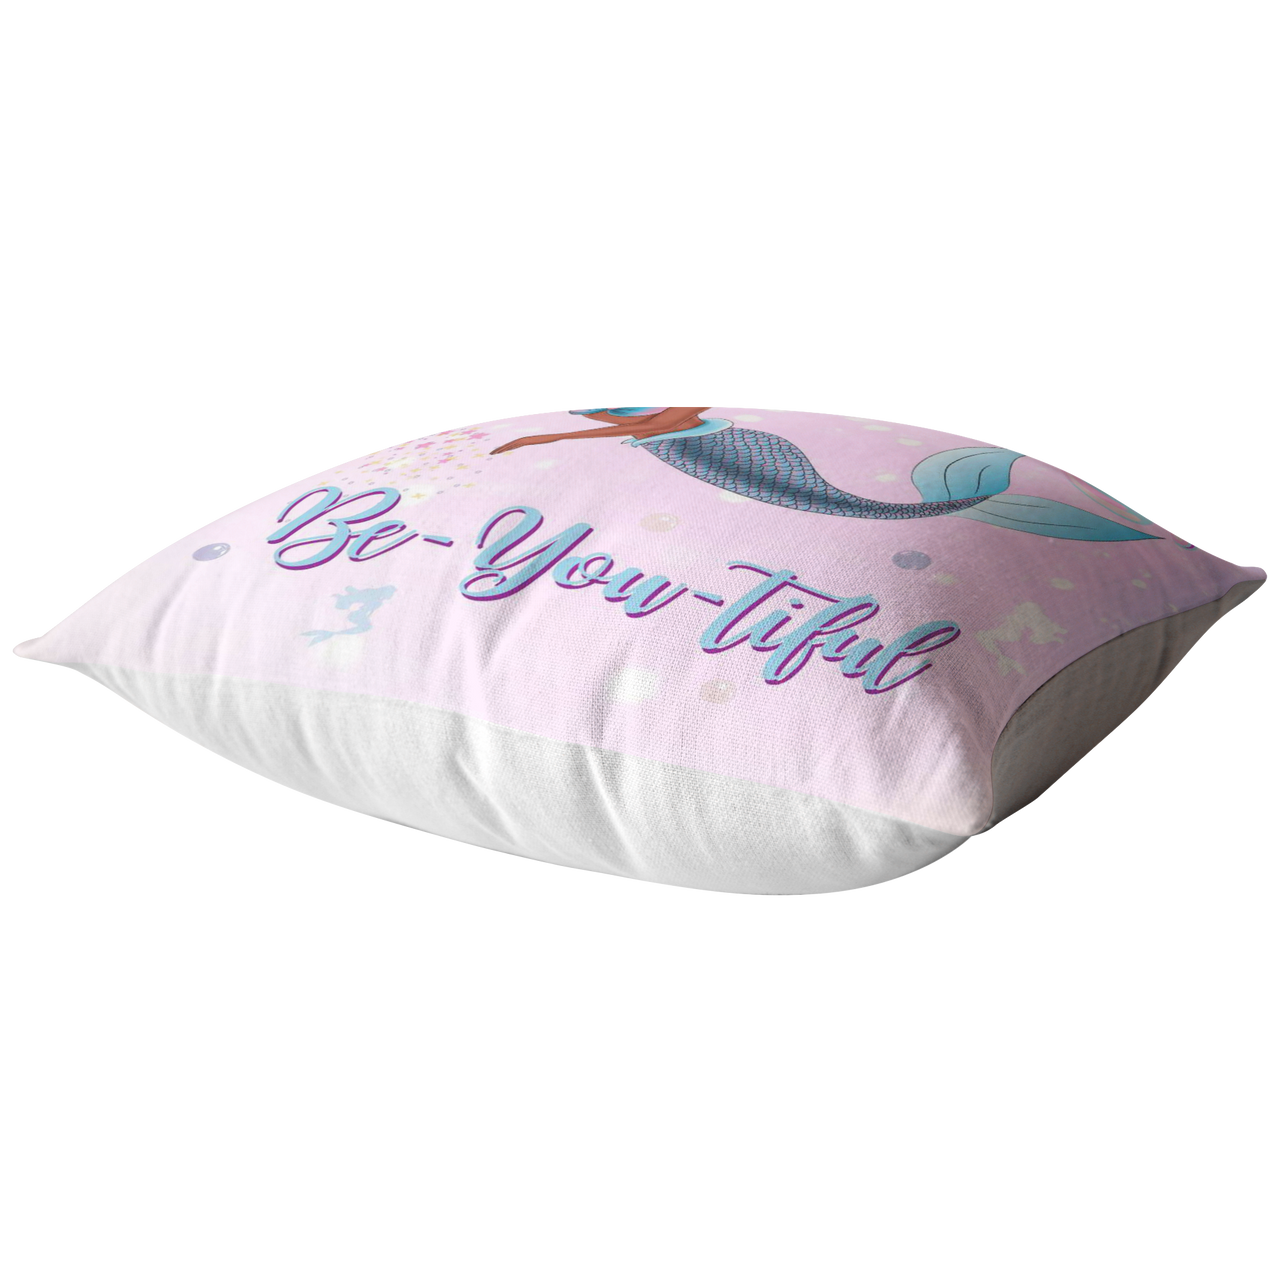 The Marli Mermaid Square Toss Pillow